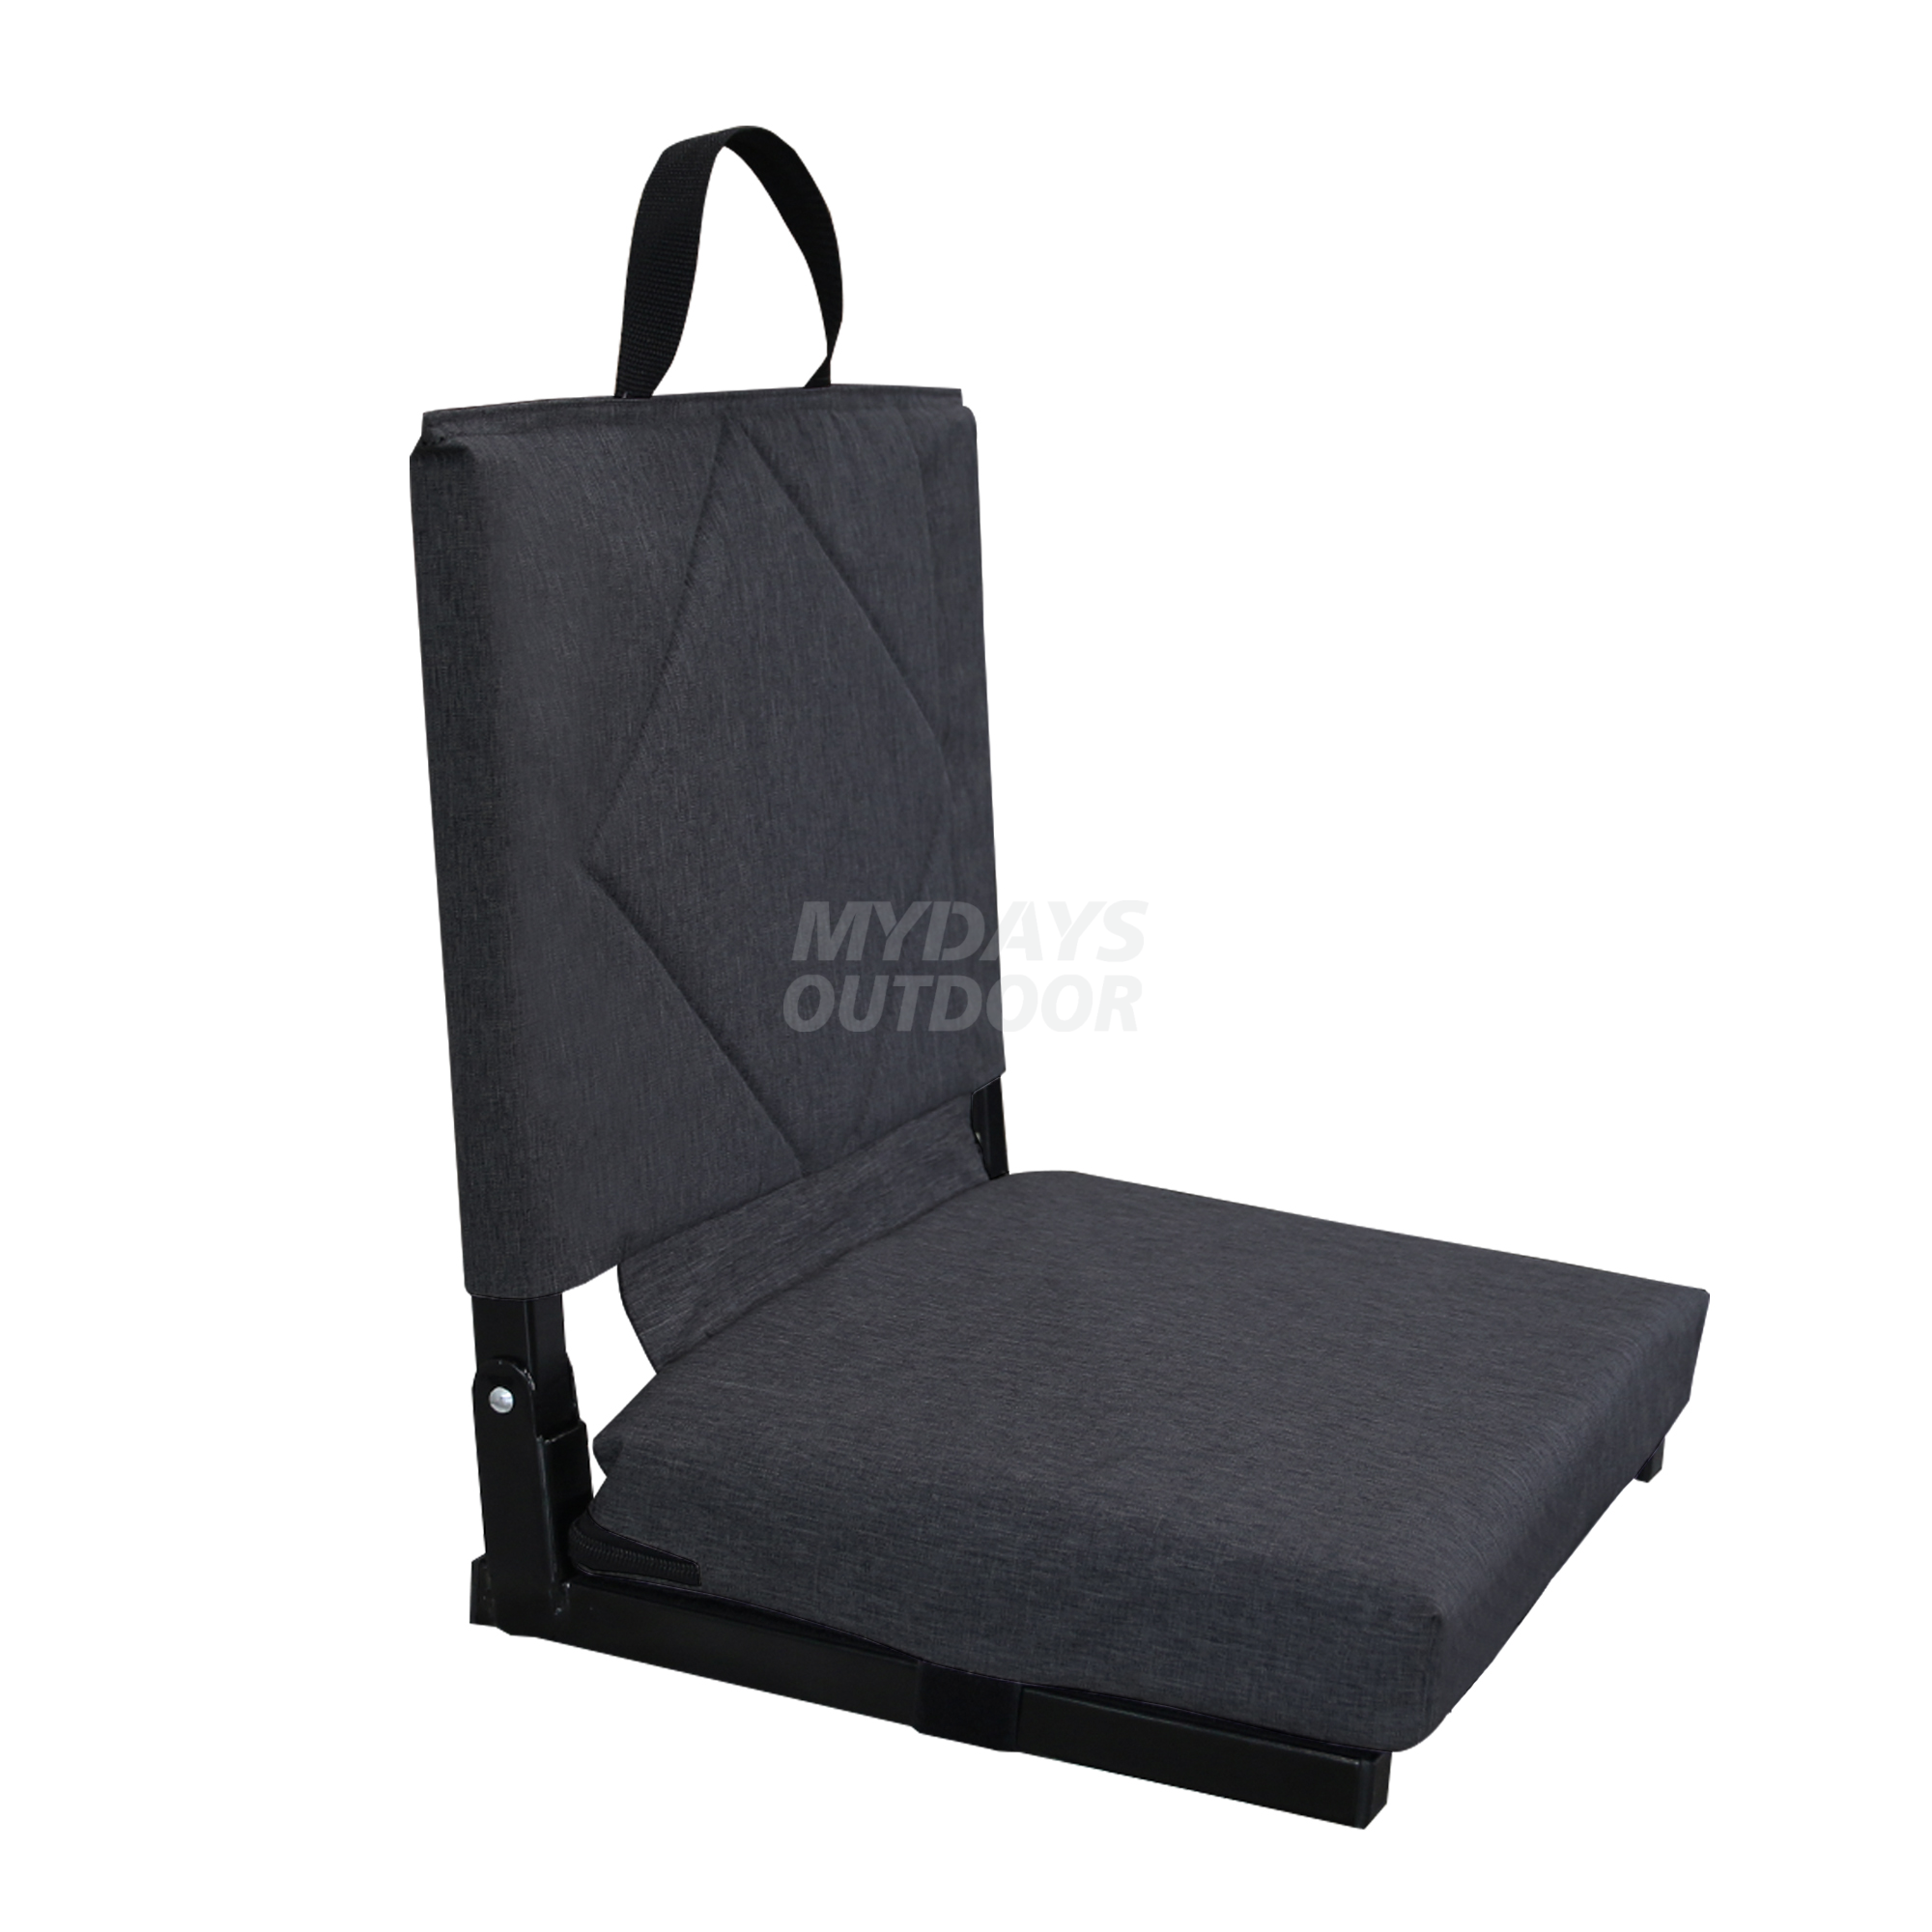 Portable Folding Steel Stadium Seat Cushion for Bleachers MDSCS-28